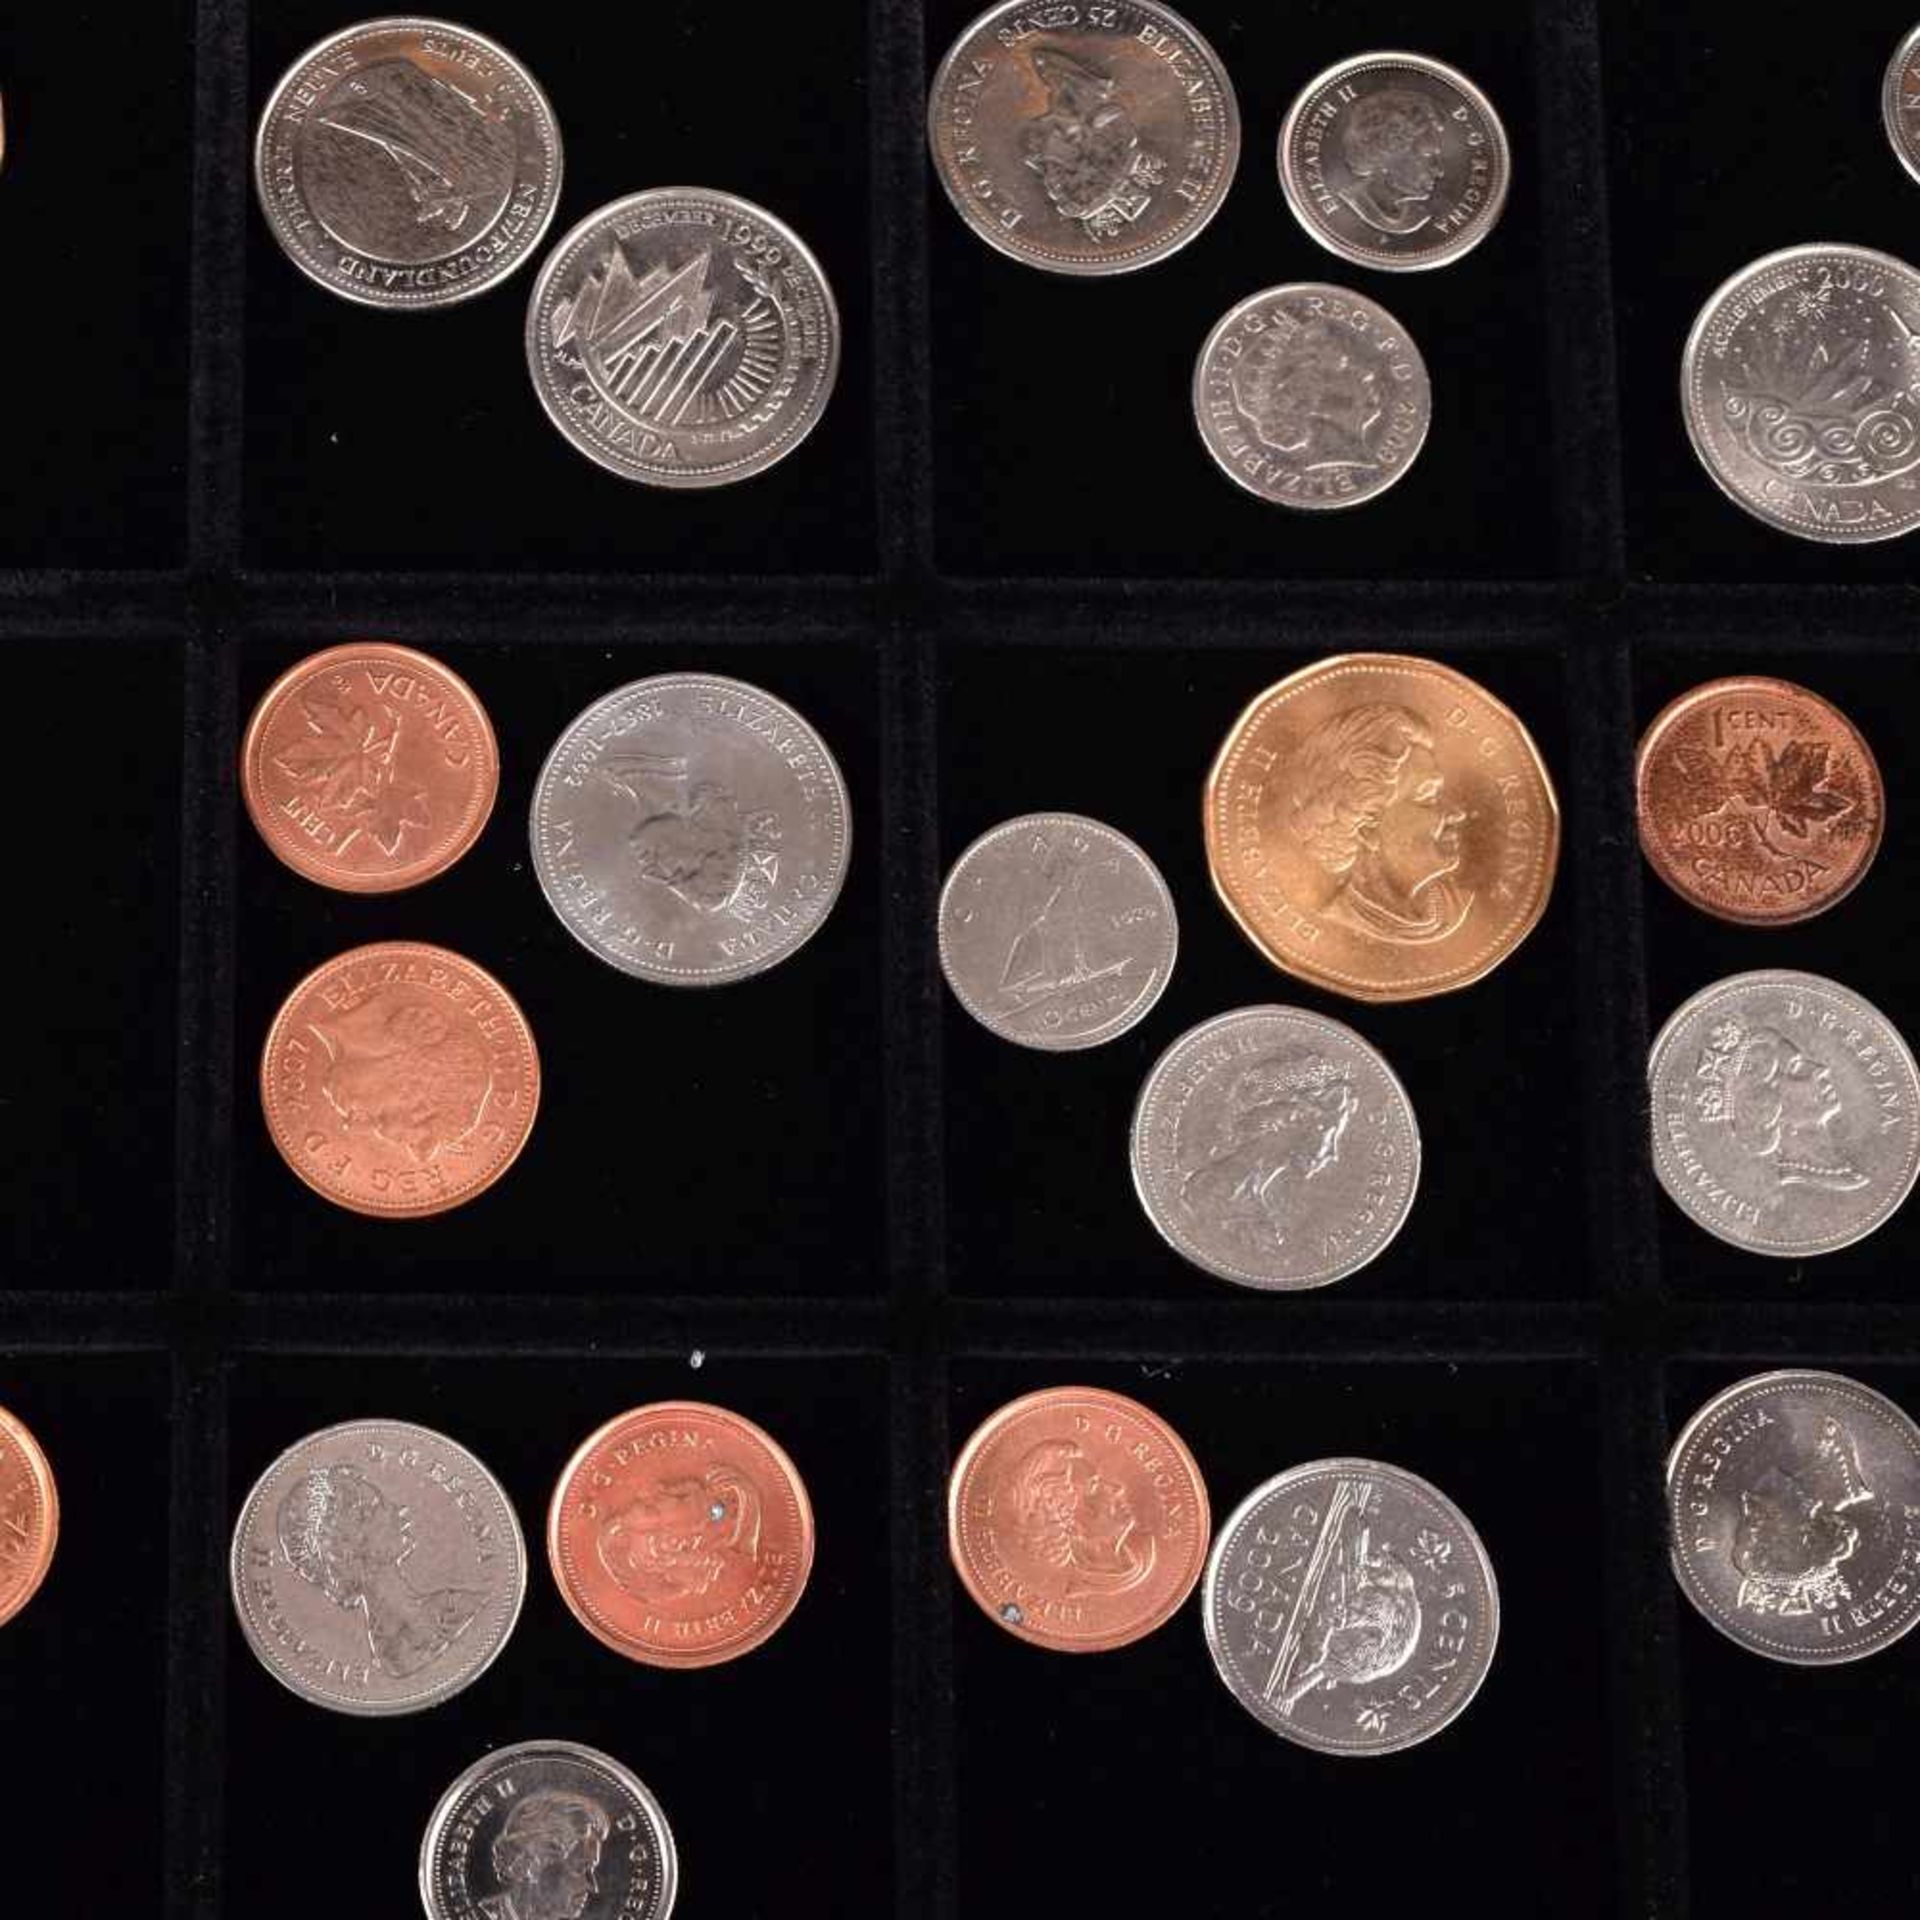 Münzen Kanada insg. über 80 Münzen, dabei u.a. 1 x Münzset 1988 (10 Cents-1 Dollar, Folie), 1 x